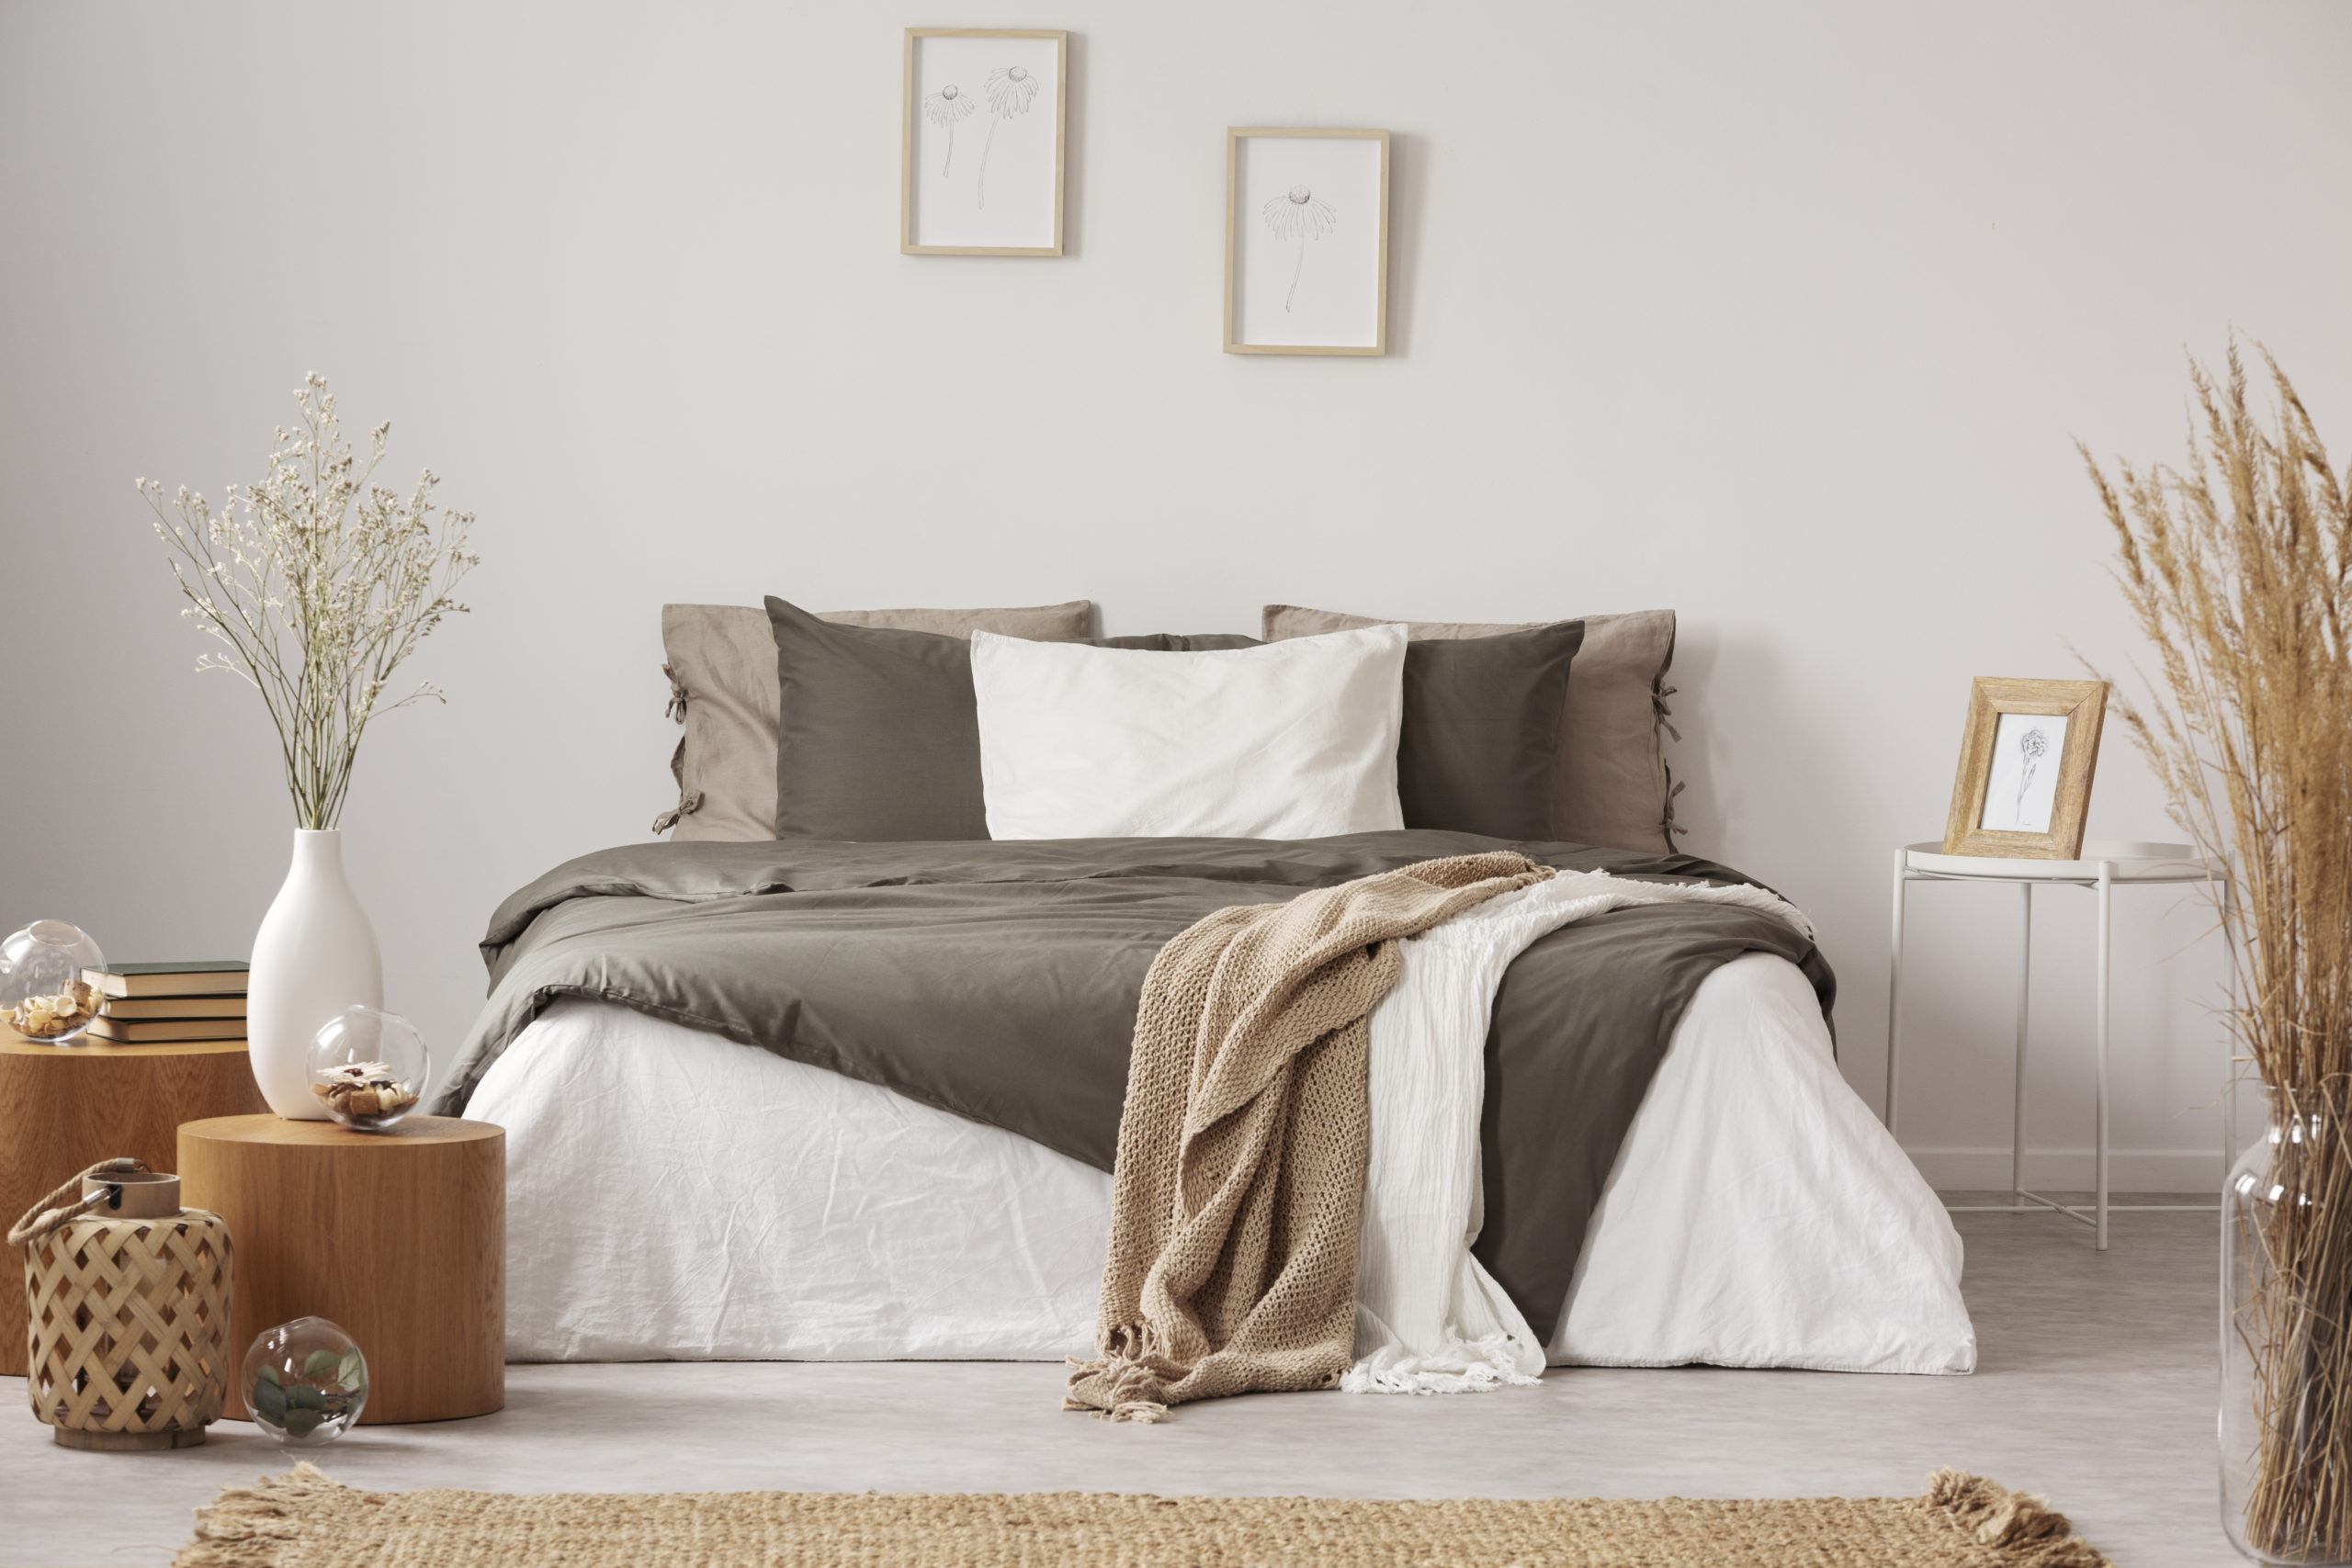 Stylish Ideas for Your Bedroom Décor